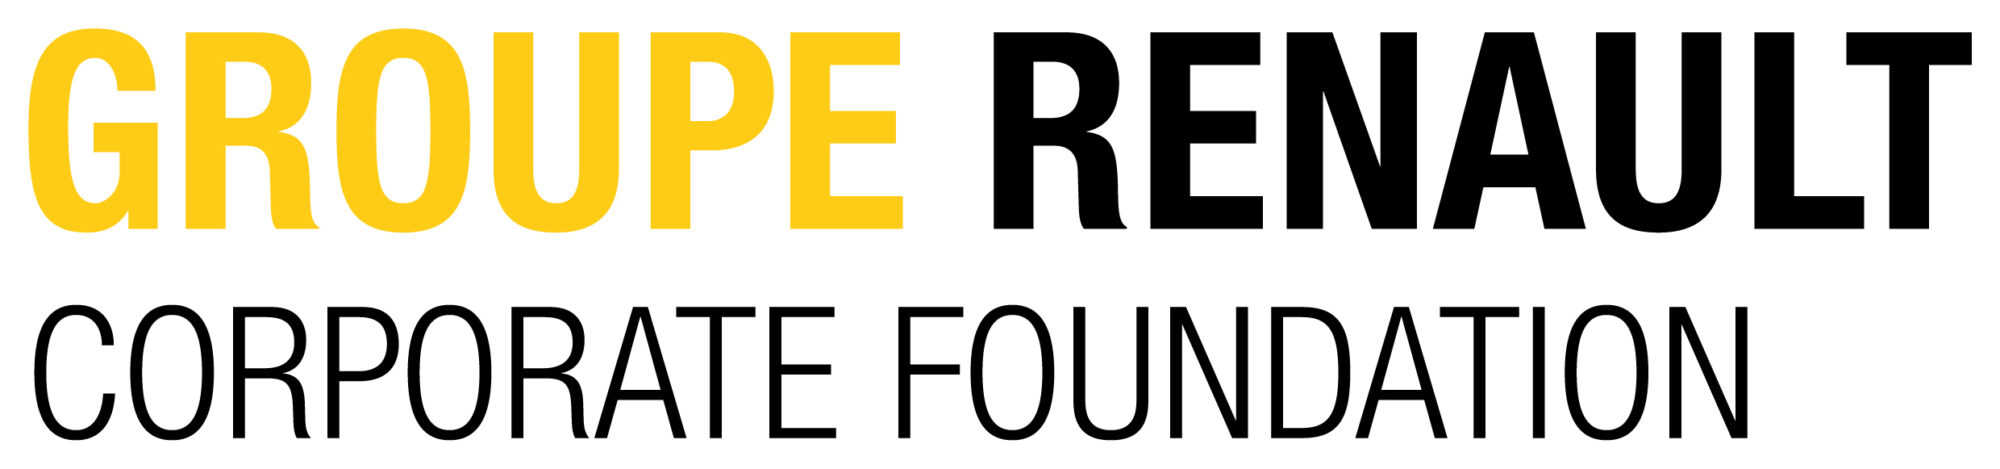 Logo - Groupe Renault Fondation d'entreprise